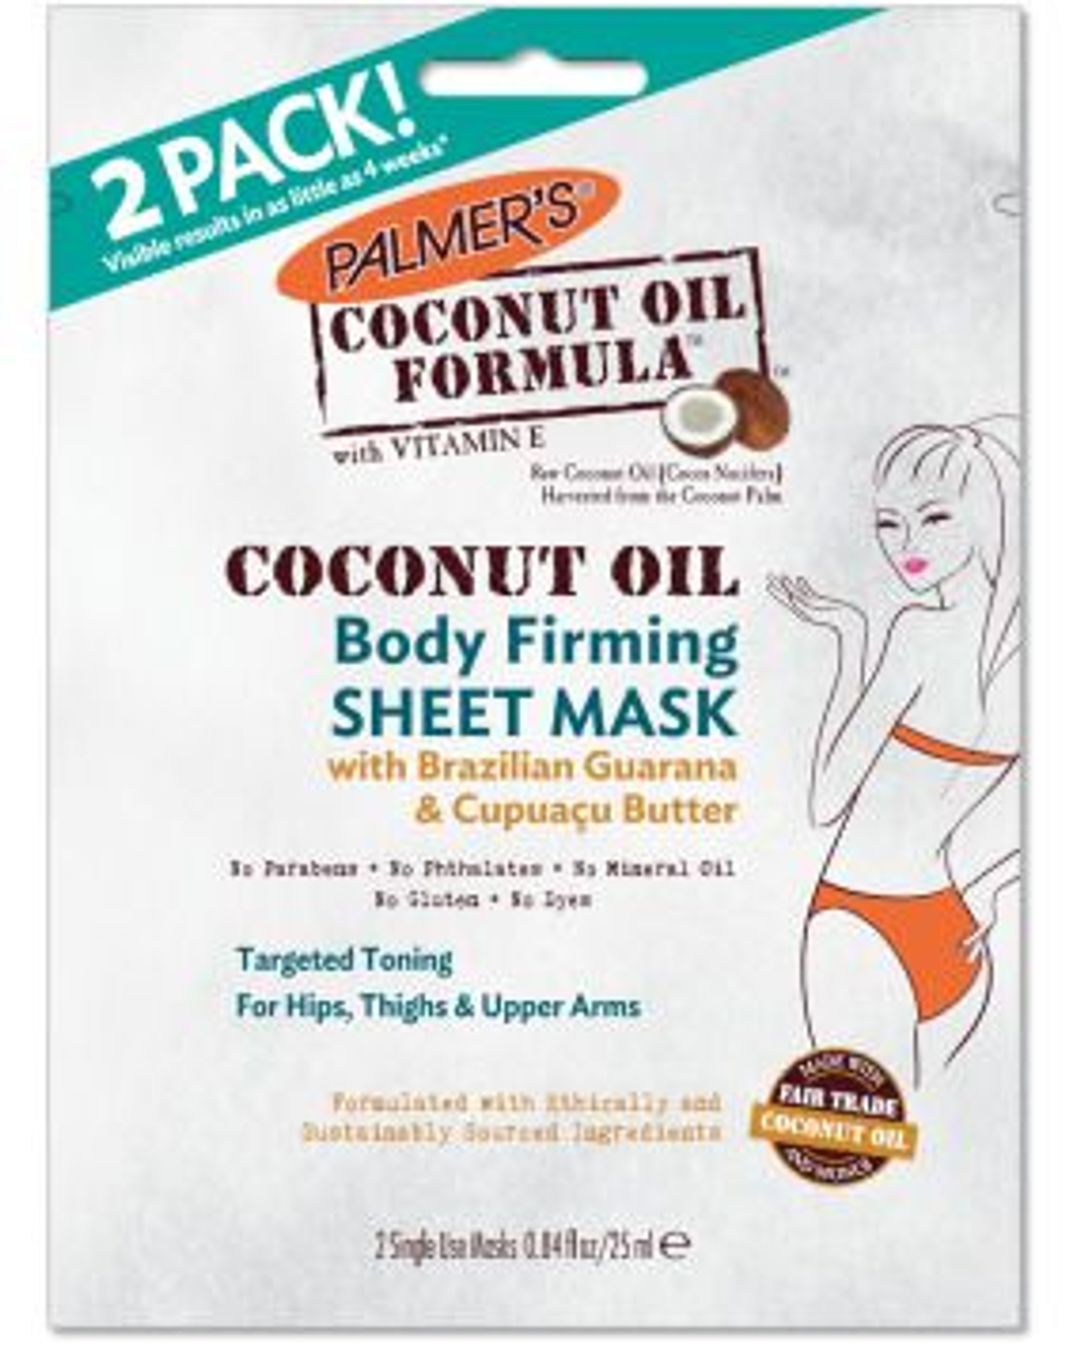 Palmer's Coconut Oil Body Firming Sheet Mask - 25ml